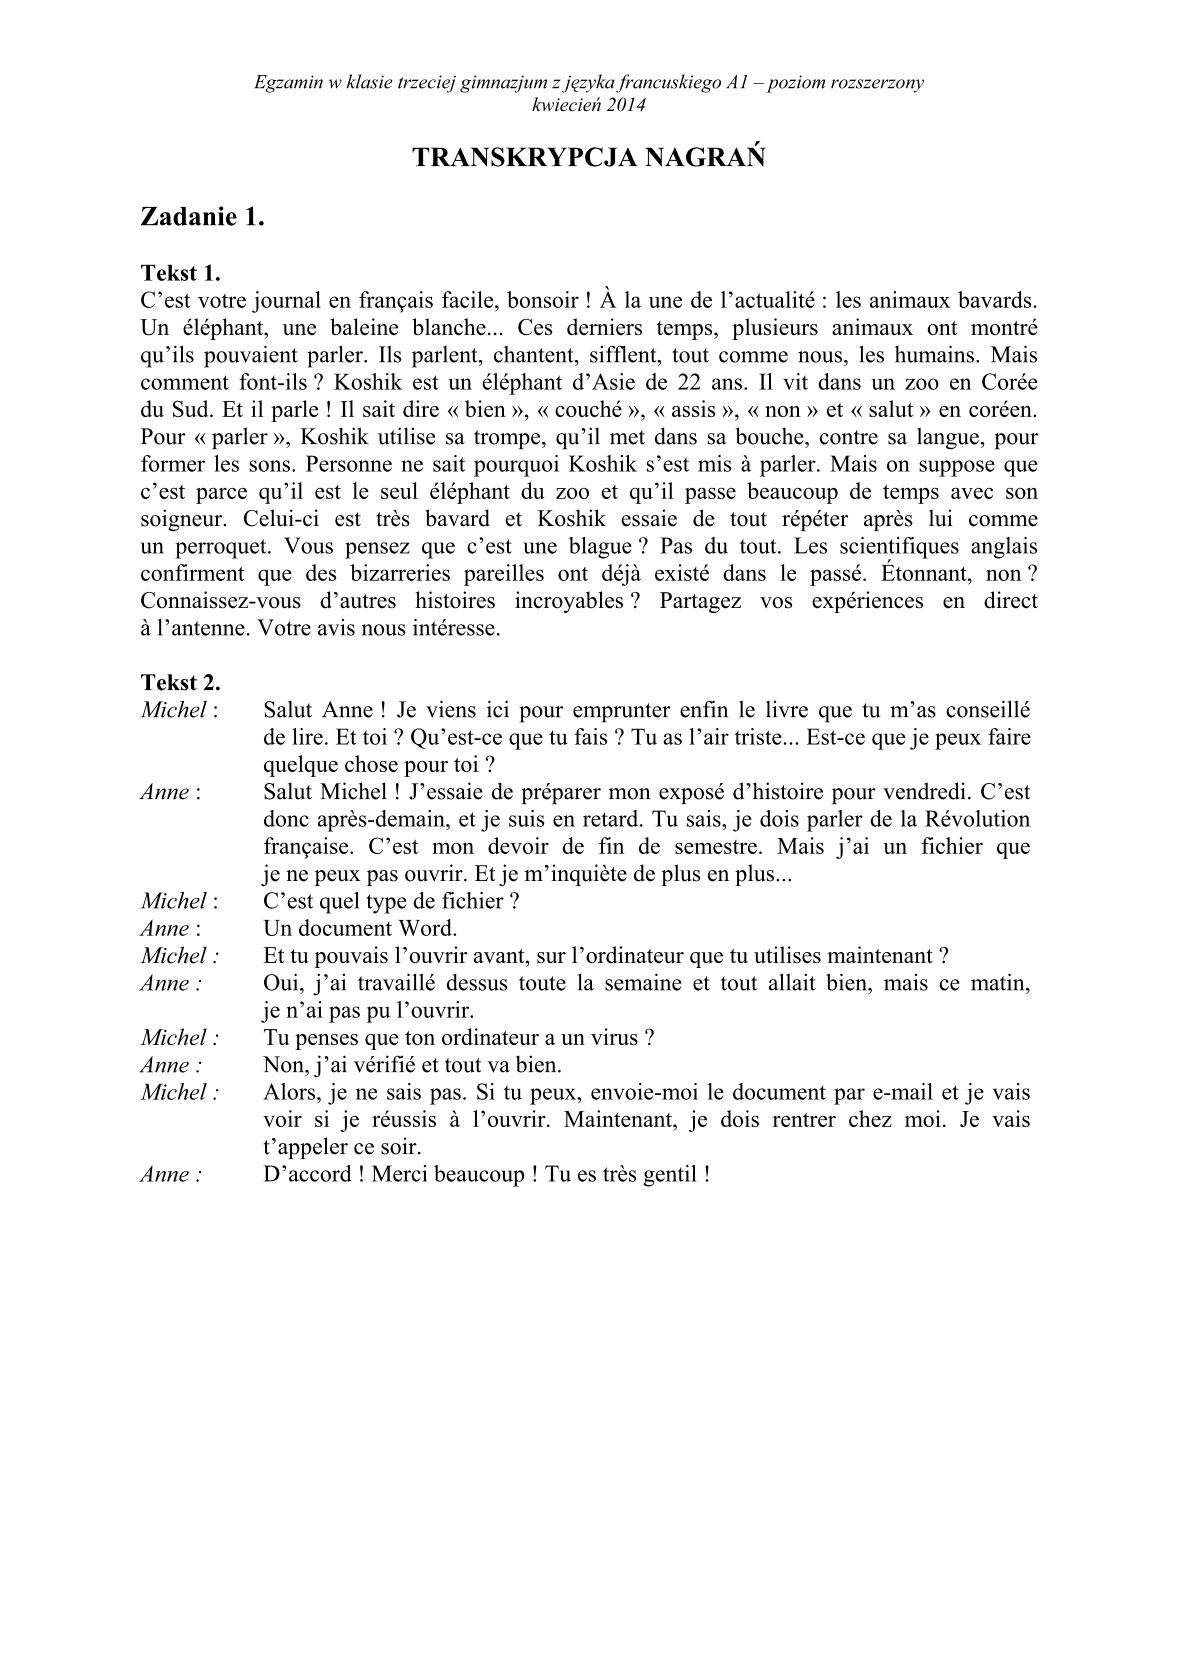 transkrypcja-francuski-poziom-rozszerzony-egzamin-gimnazjalny-25.04.2014-1